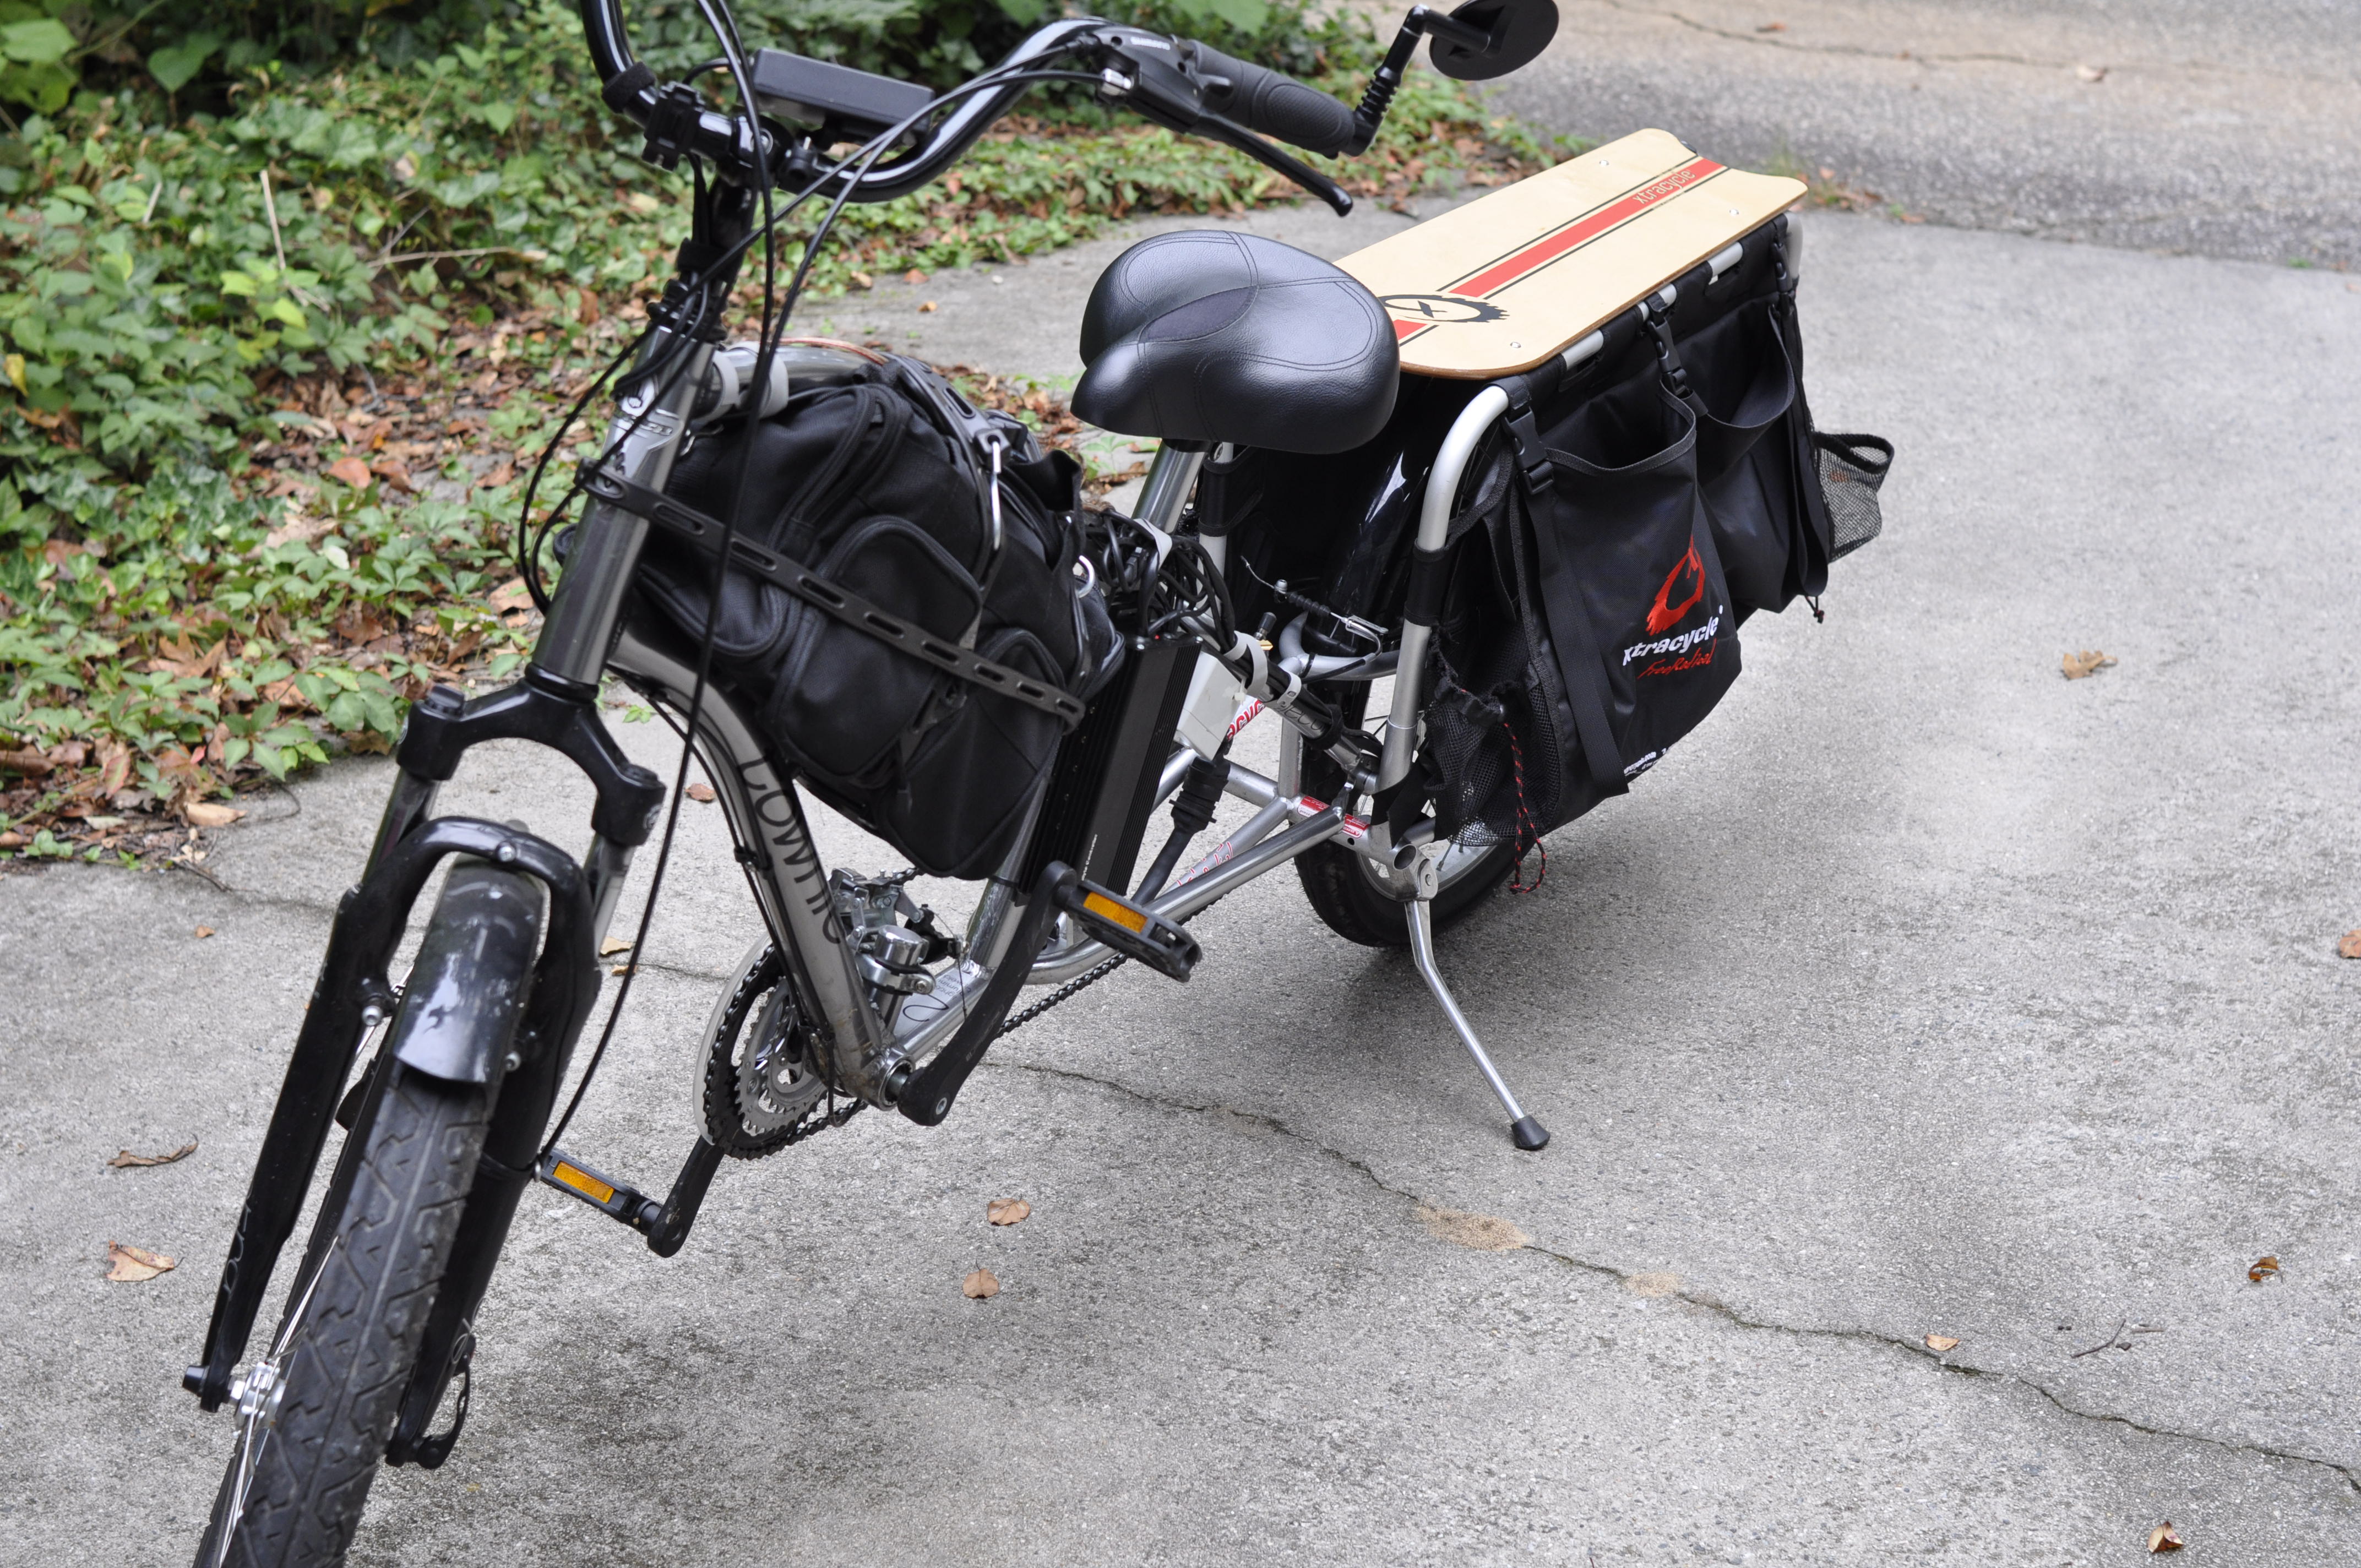 Second iteration cargo bike